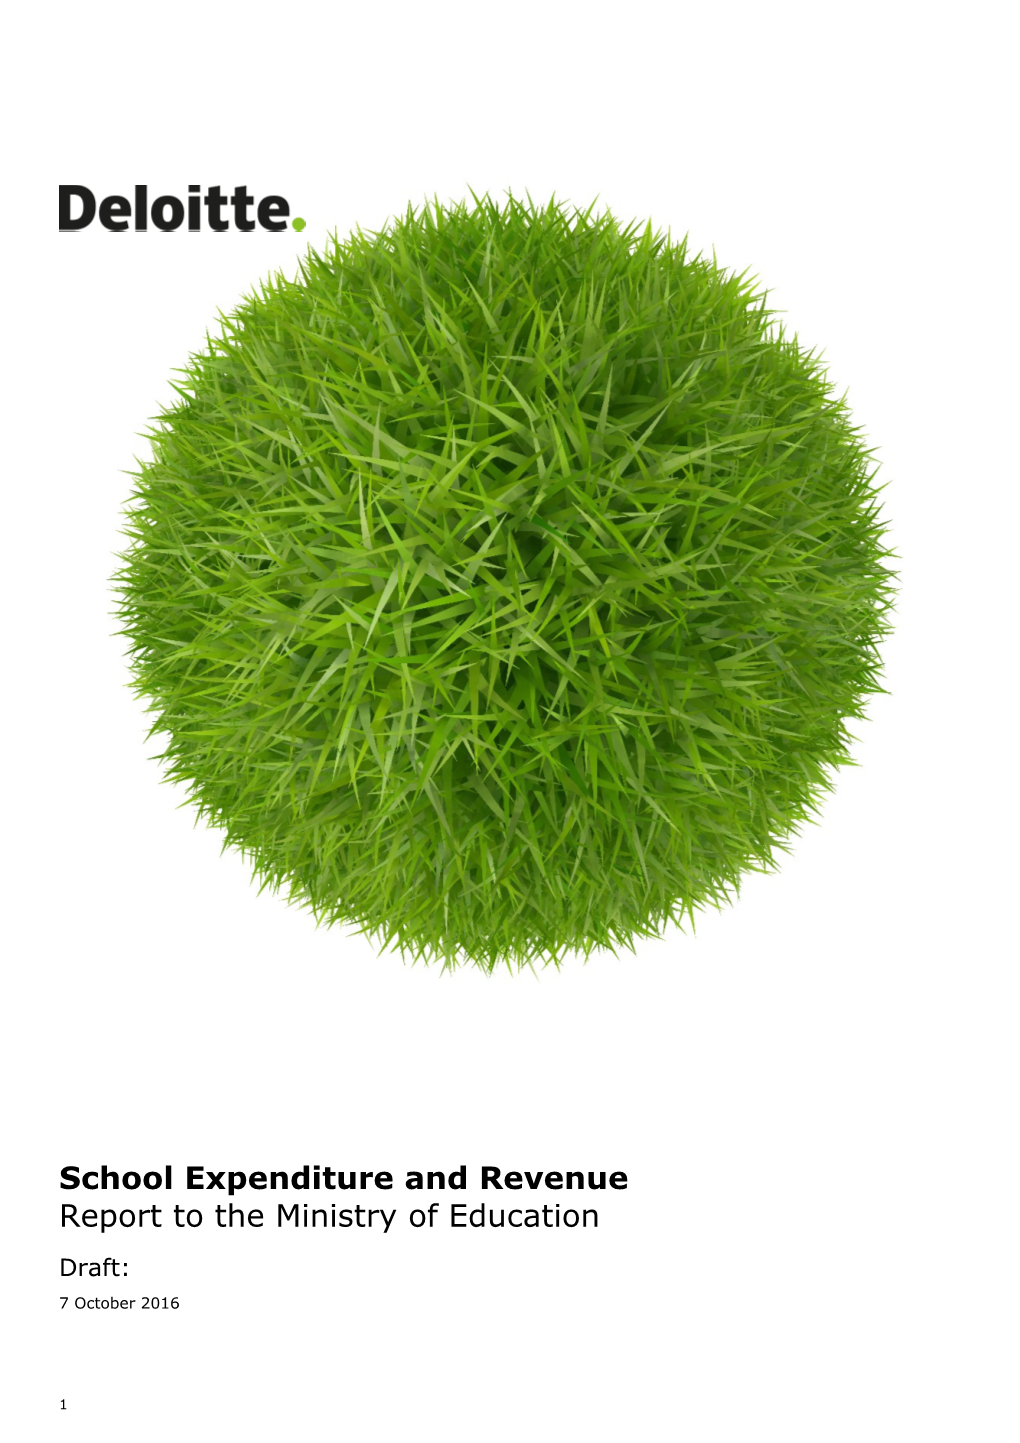 Deloitte Report on School Expenditure and Revenue